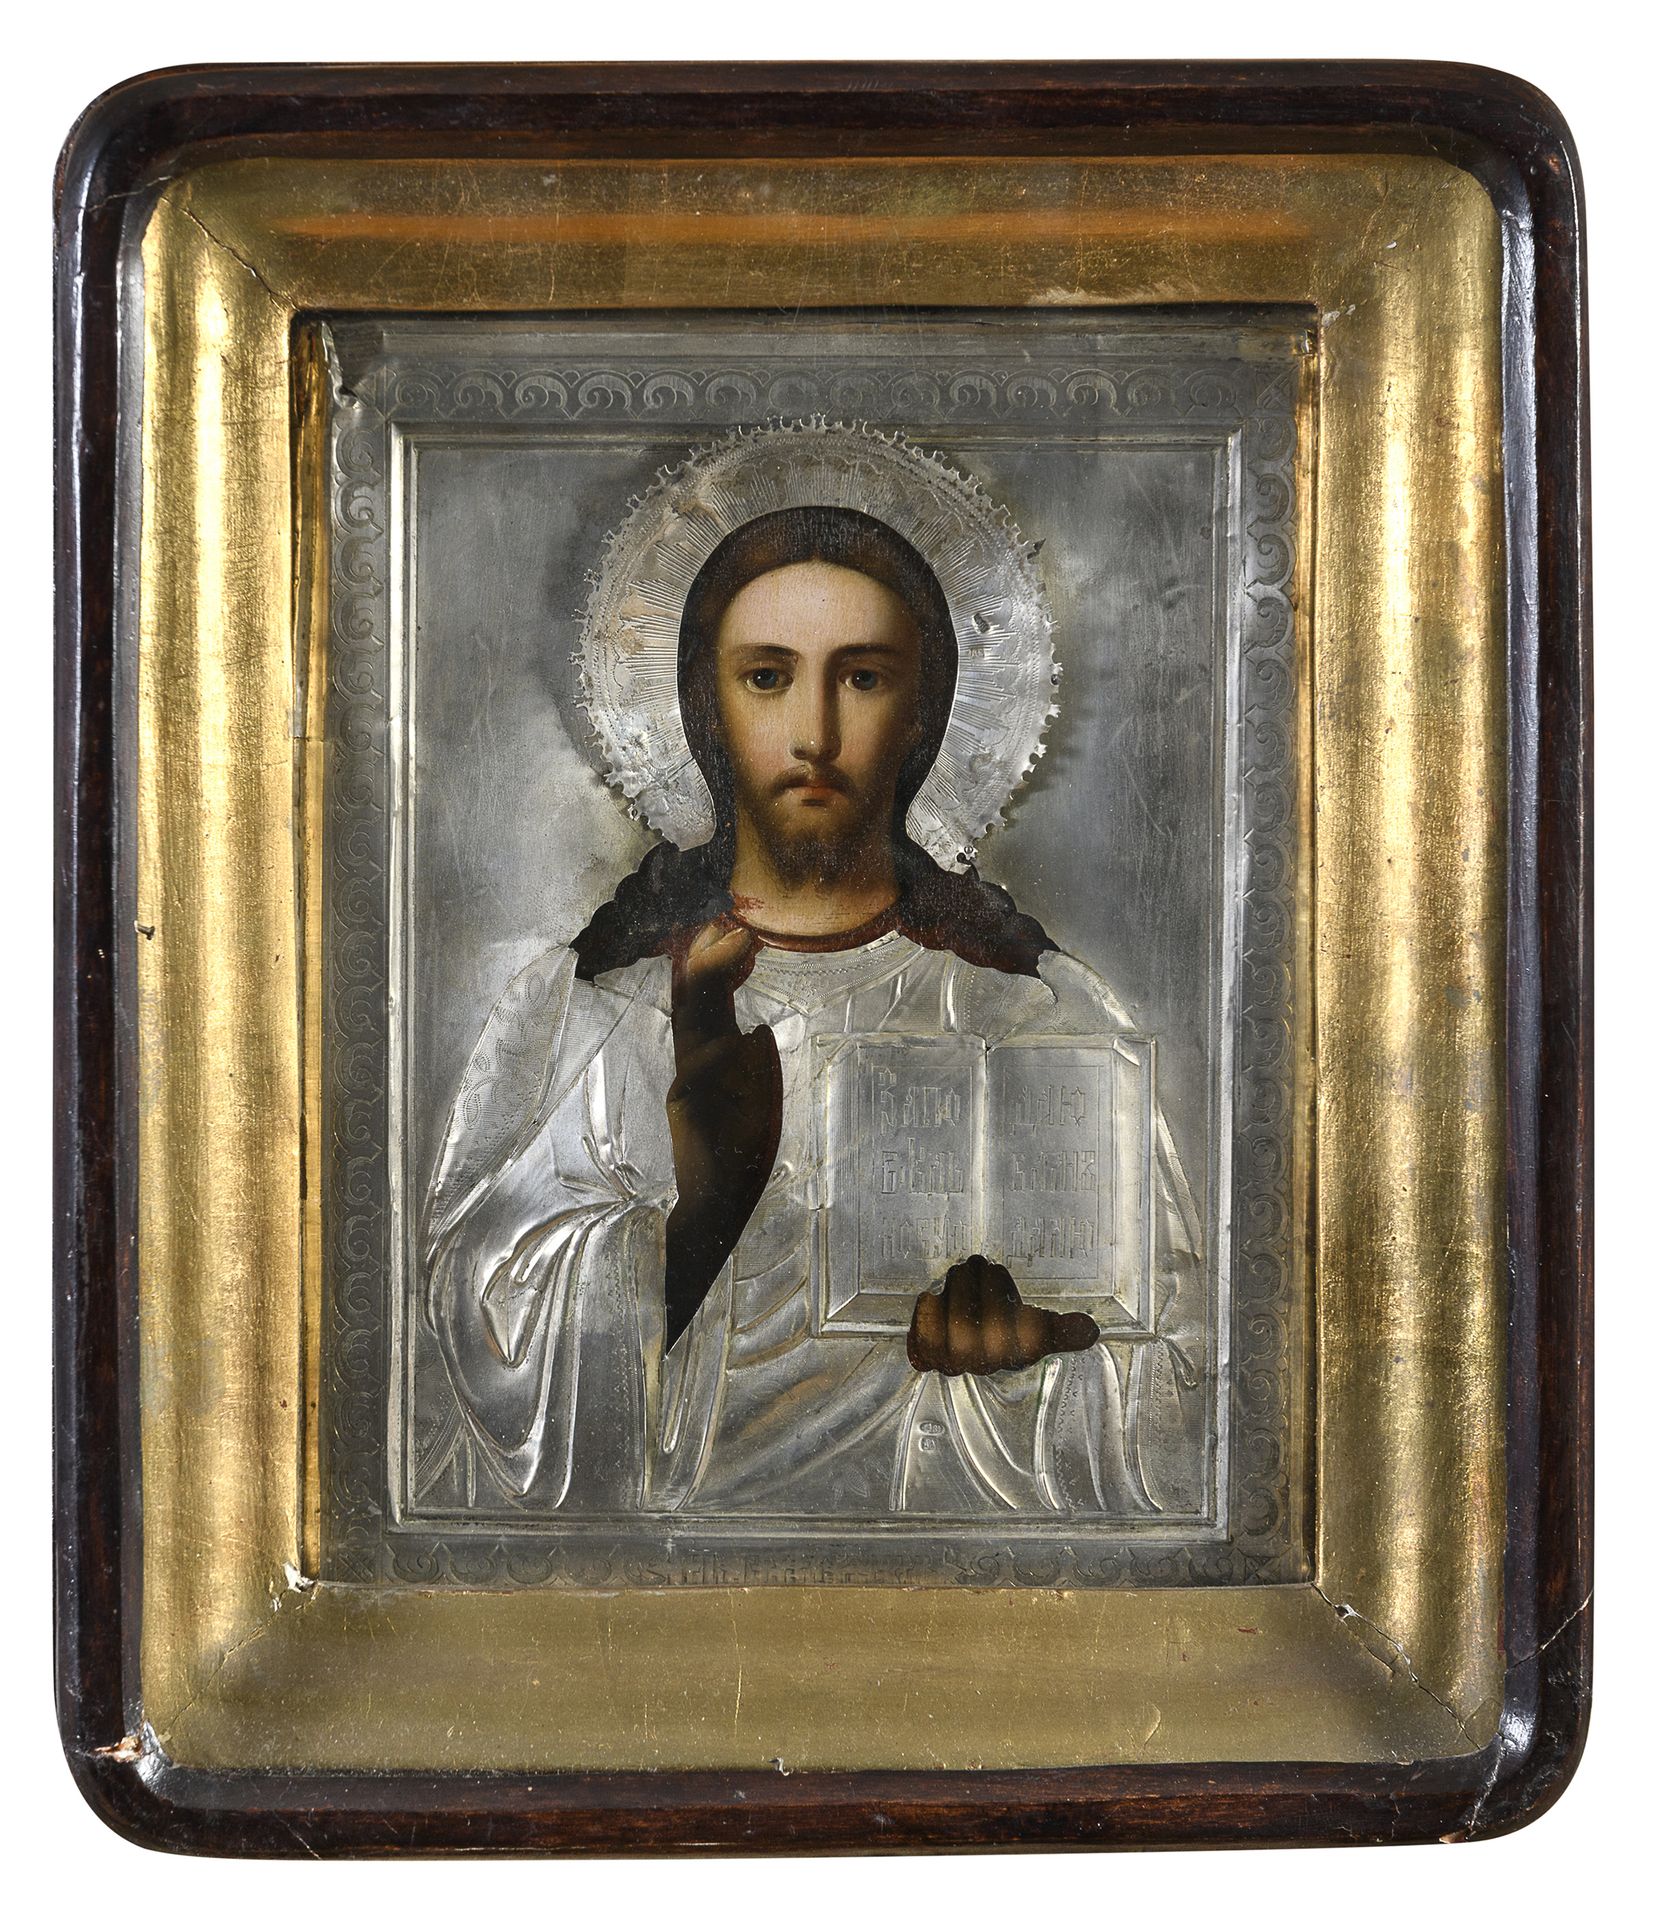 Null 俄罗斯画家，19世纪末



耶稣基督圣人

板面油画，cm. 22 x 17

压花银色里扎（缺陷）

木制神龛框架